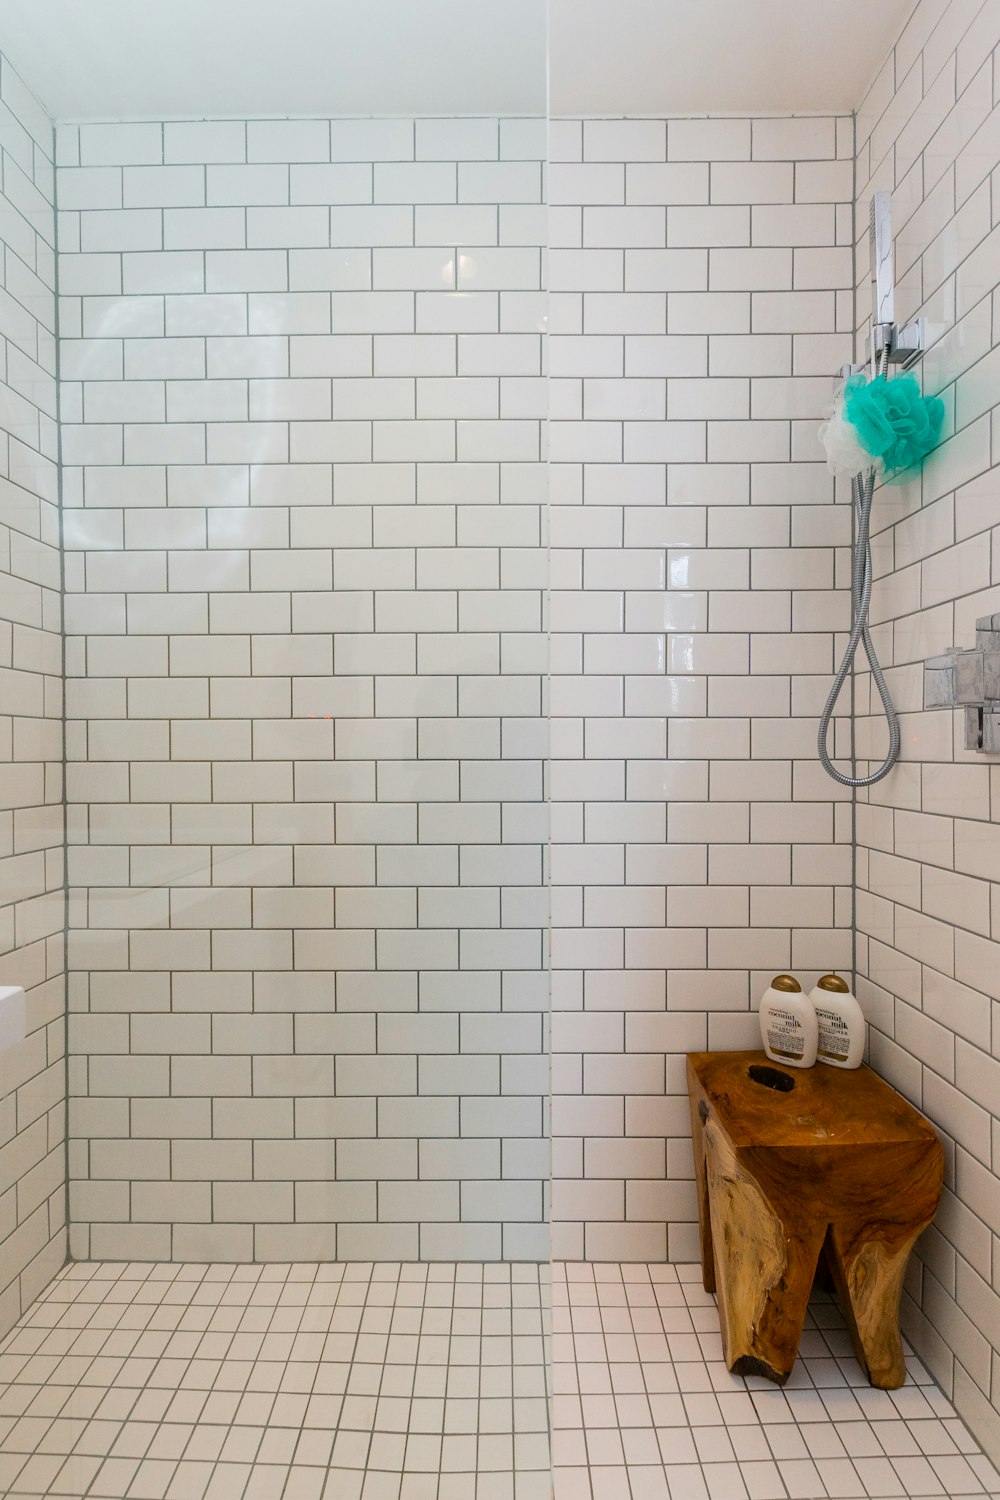 Bathroom Tile Pictures Free, Bathroom Tile Designs Gallery